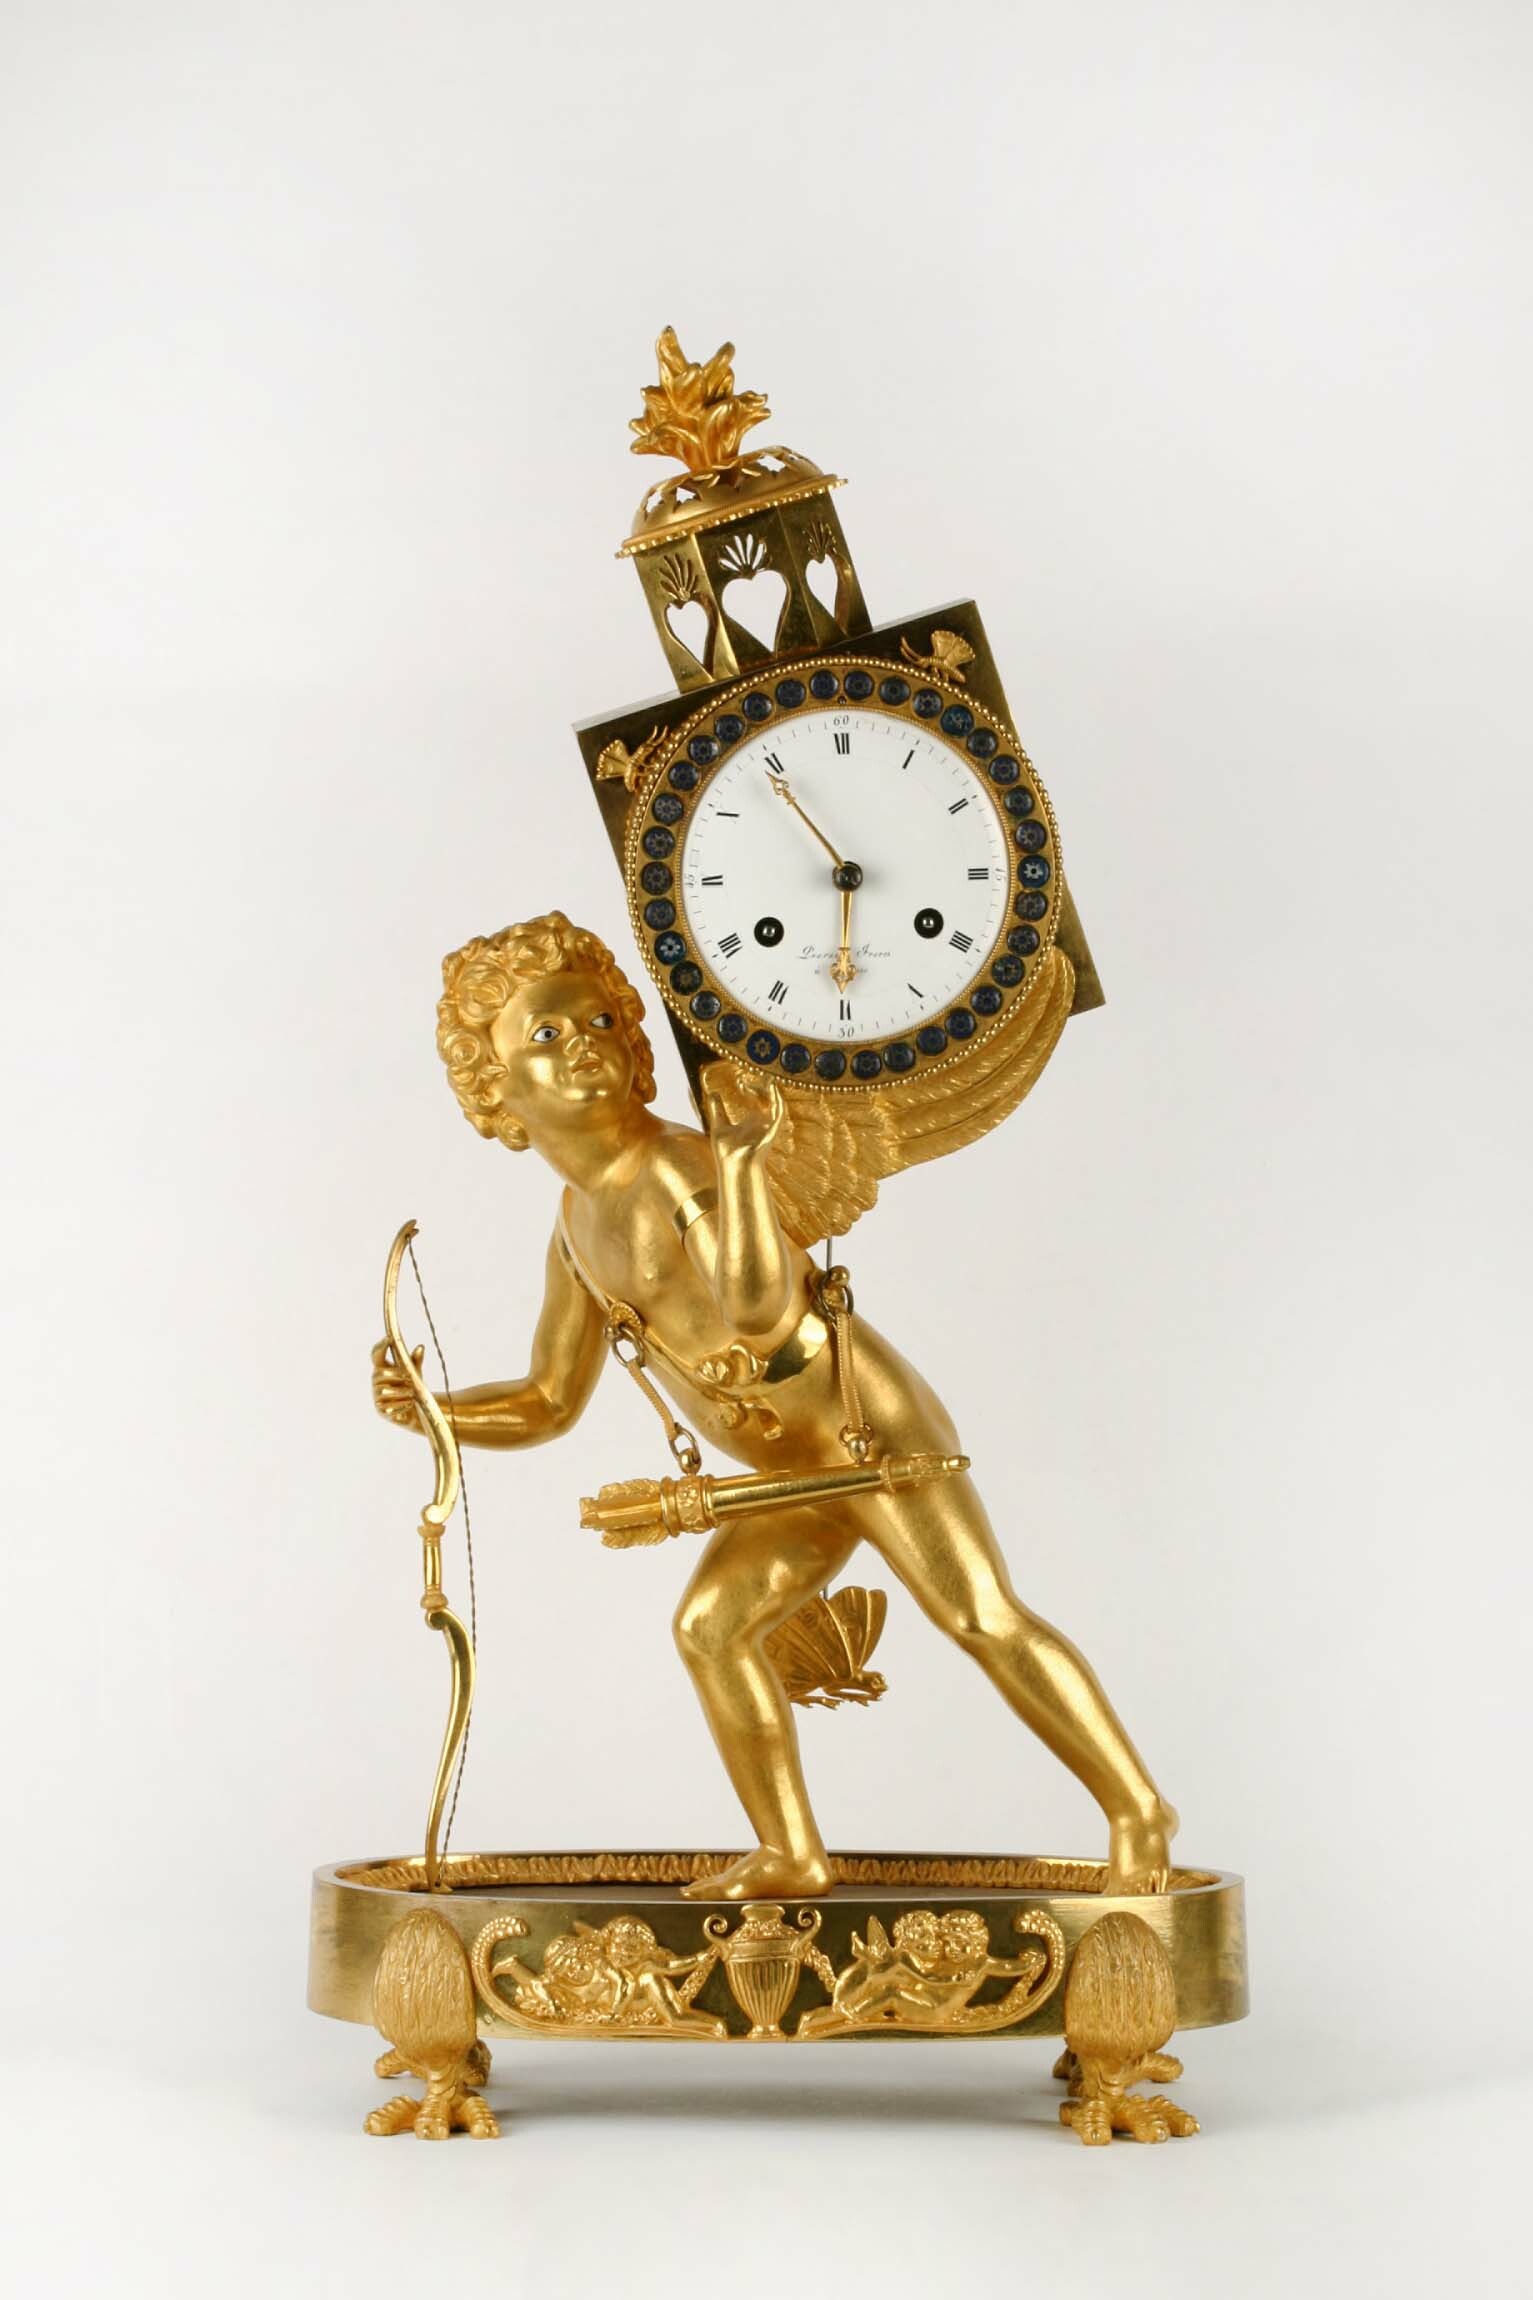 Tischuhr, Prevost Frères, Toulouse, um 1800 (Deutsches Uhrenmuseum CC BY-SA)